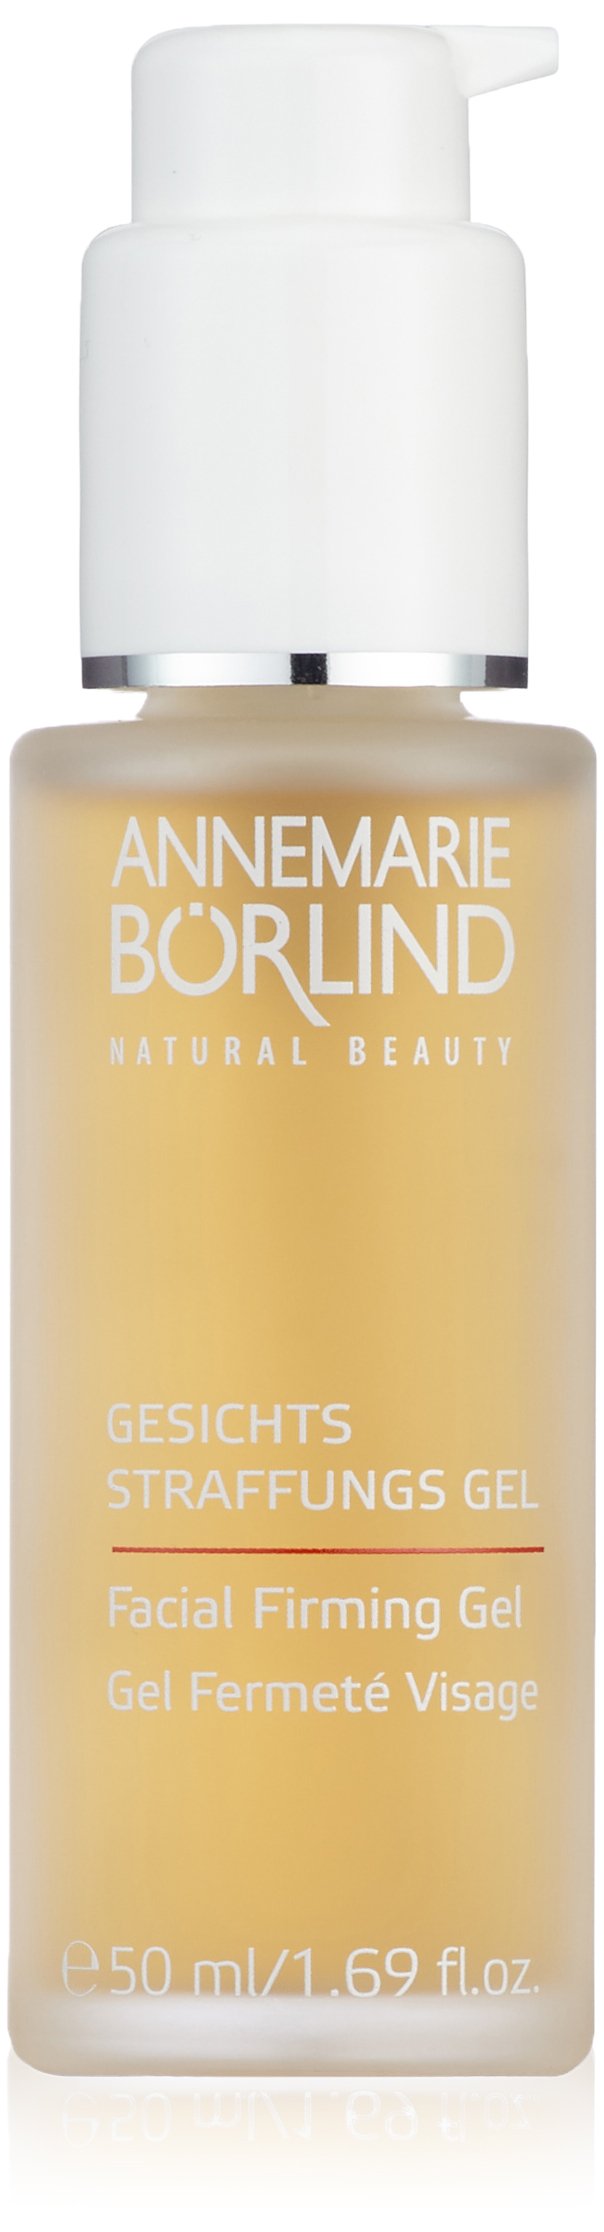 Annemarie Borlind Facial Firming Gel 1.69oz, 50ml